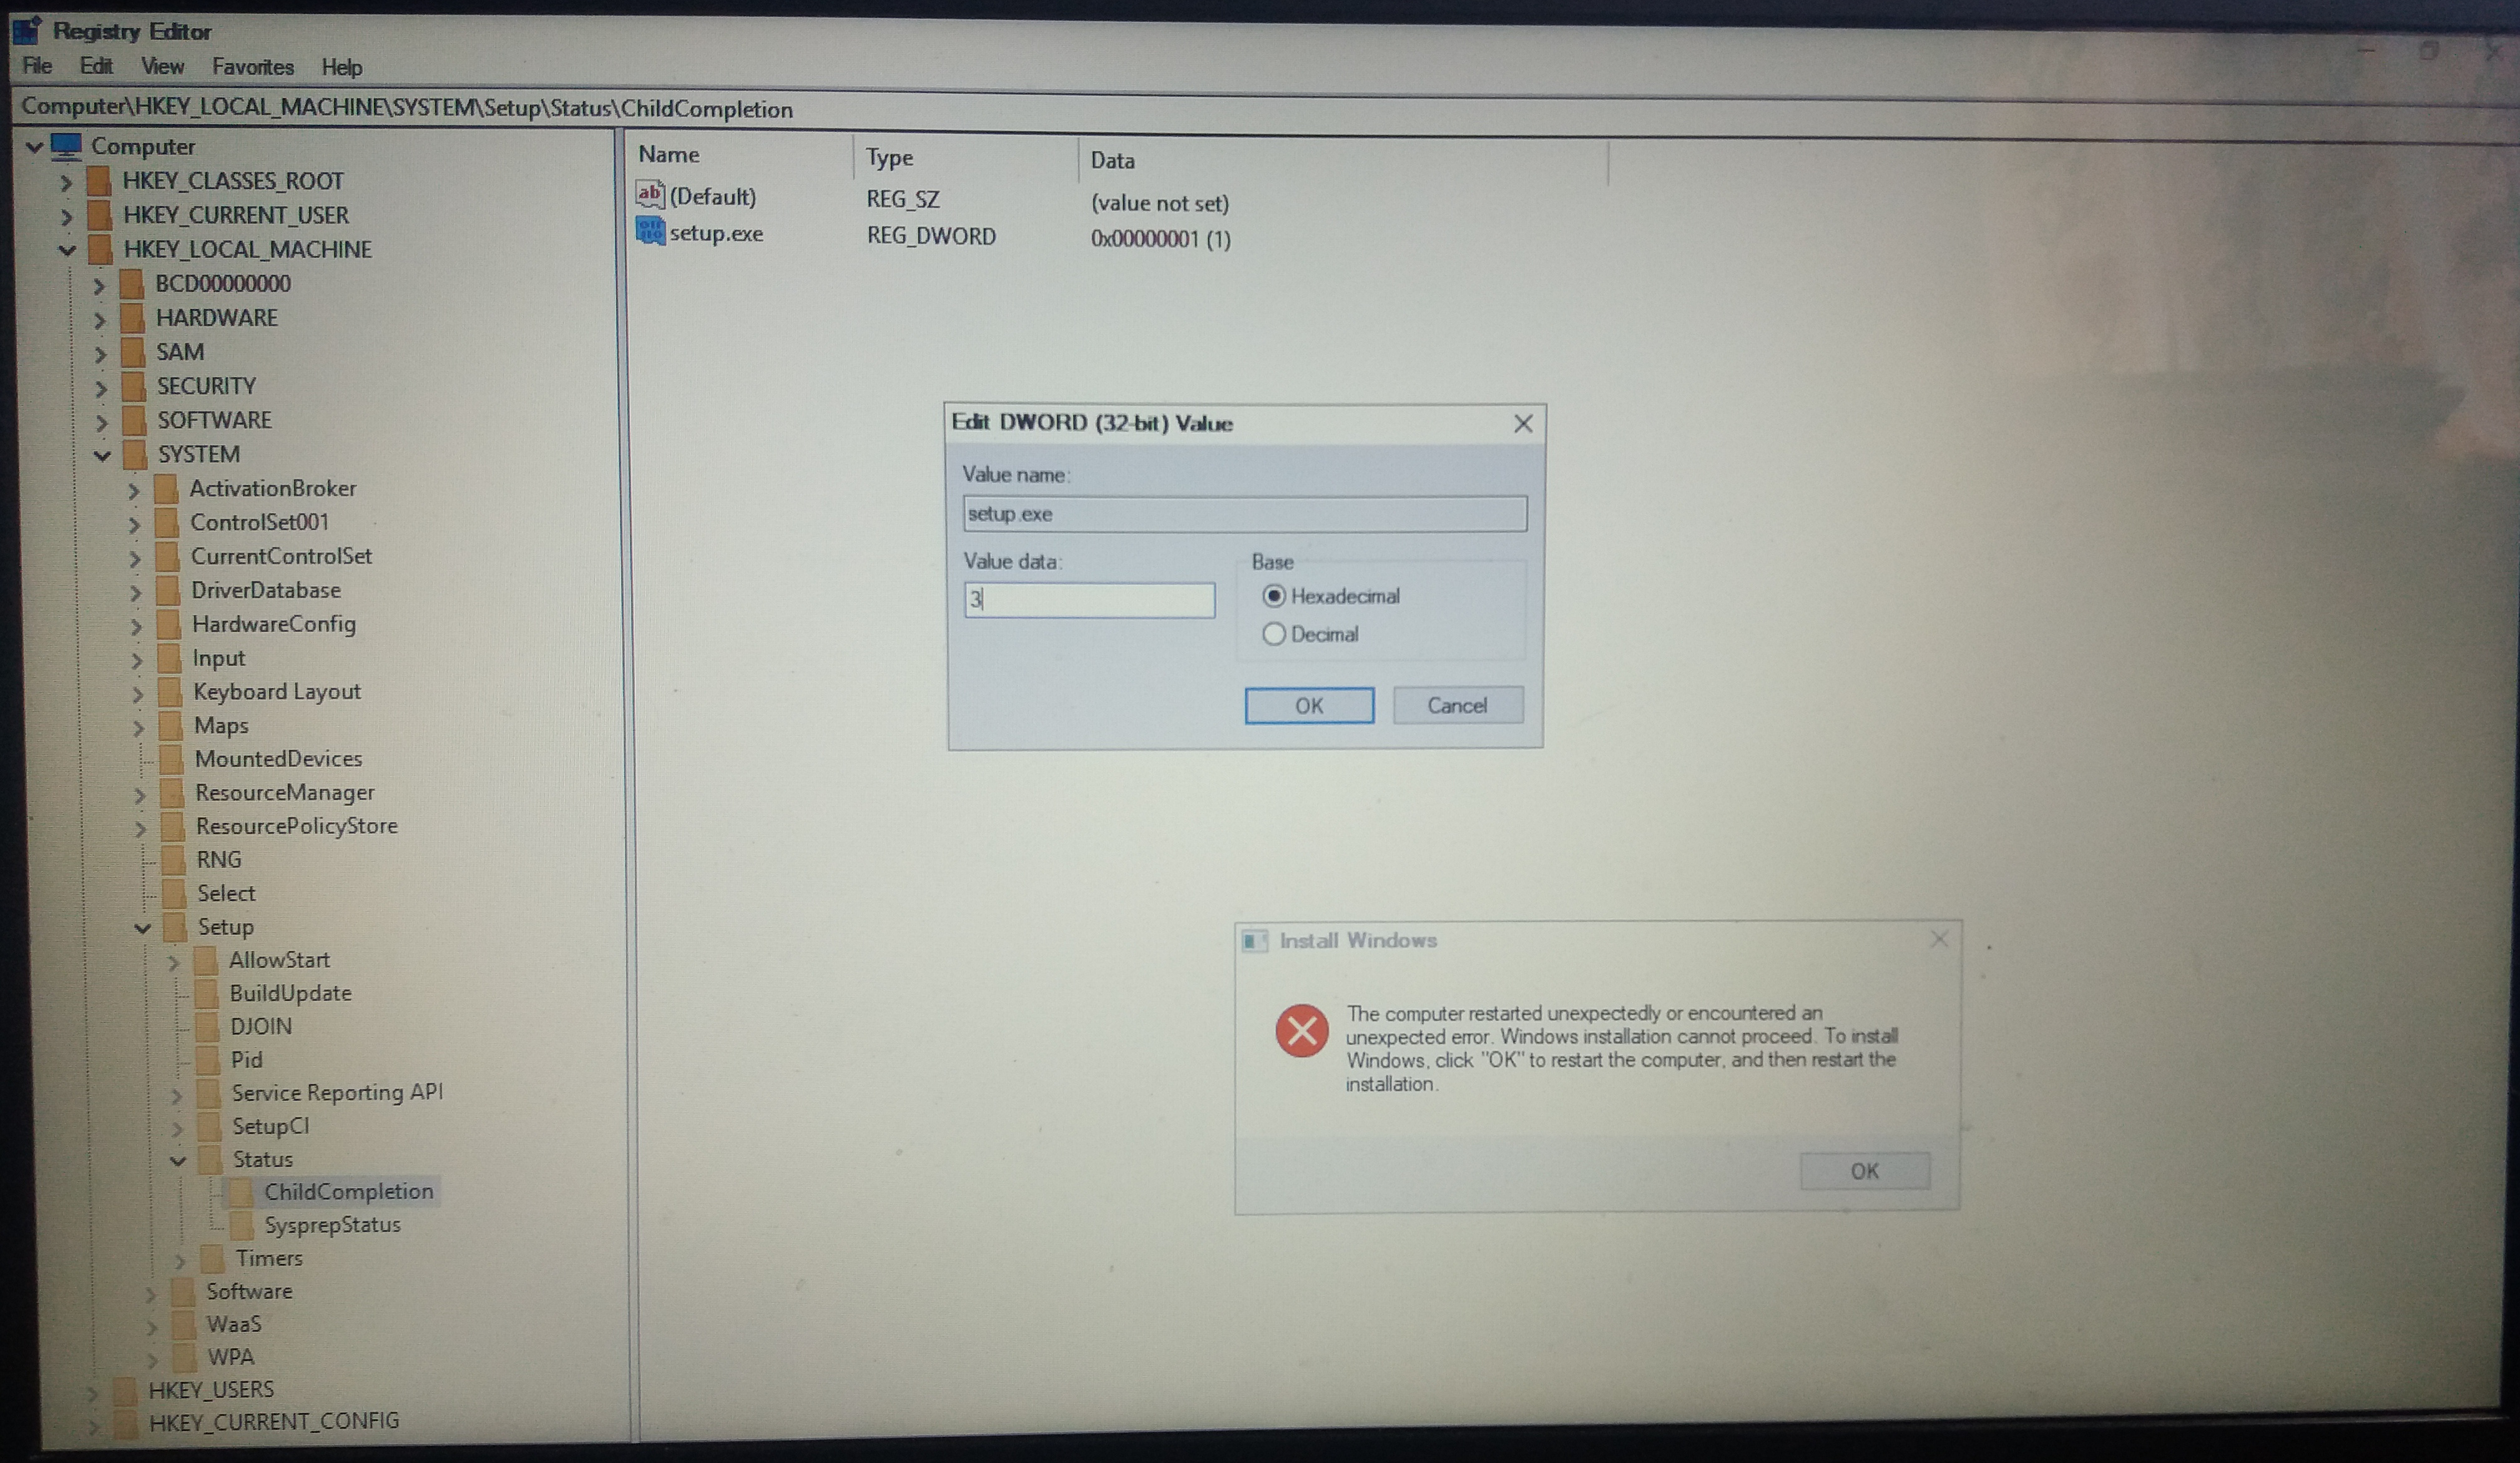 Image Register Editor Windows Fix WIndows Installation Error